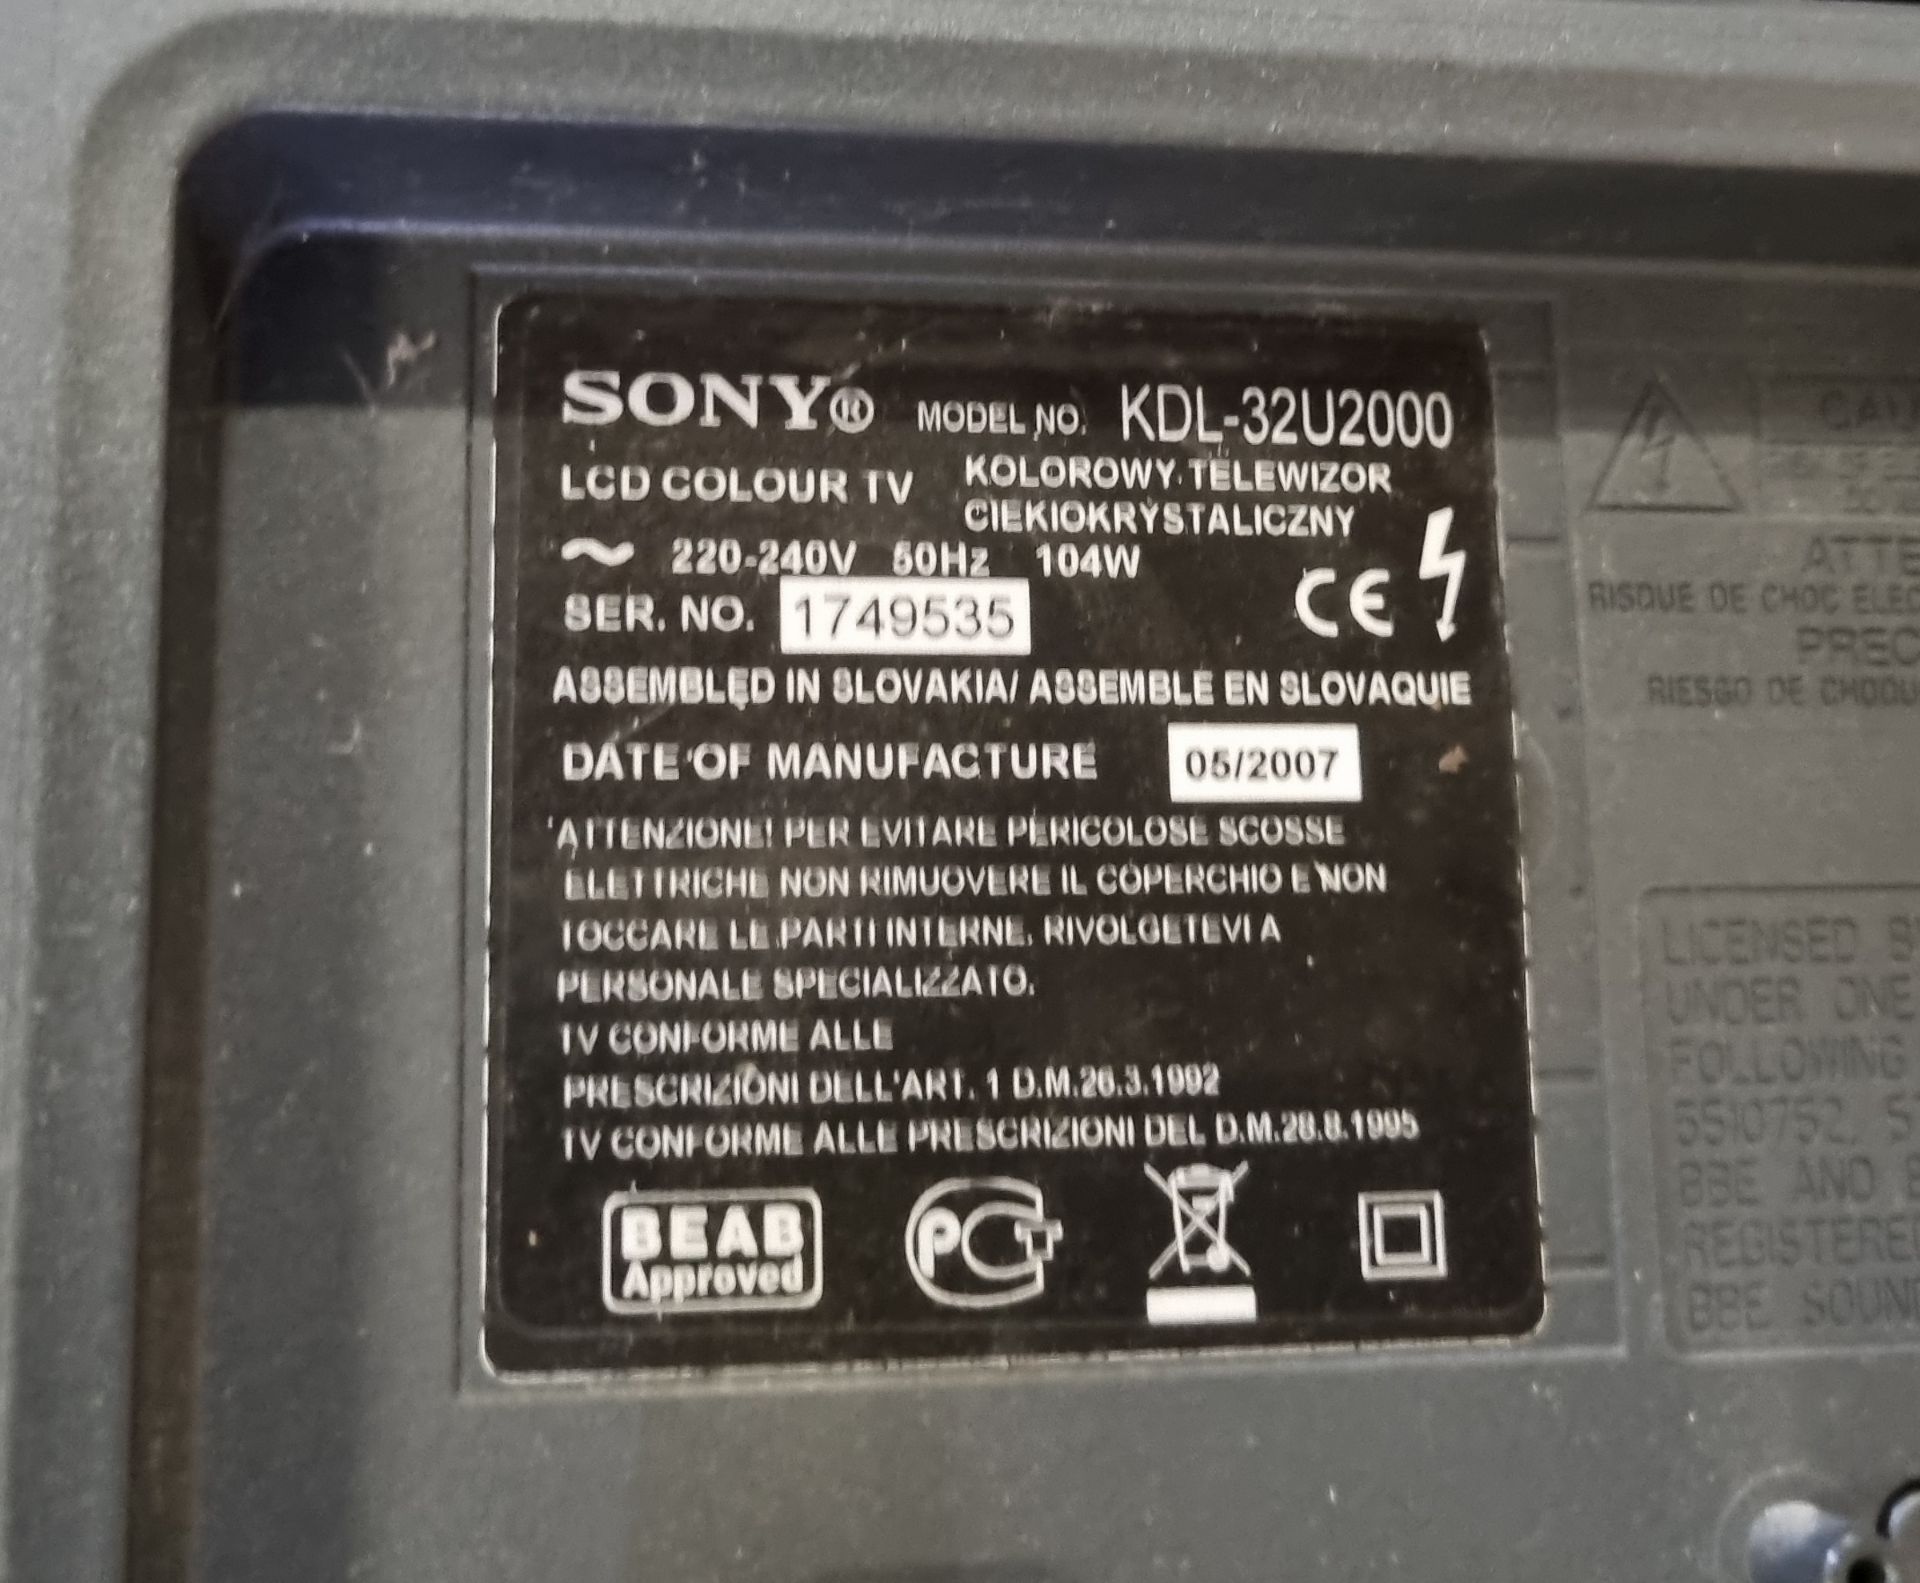 Sony KDL-32U2000 32" LCD TV - Image 4 of 5